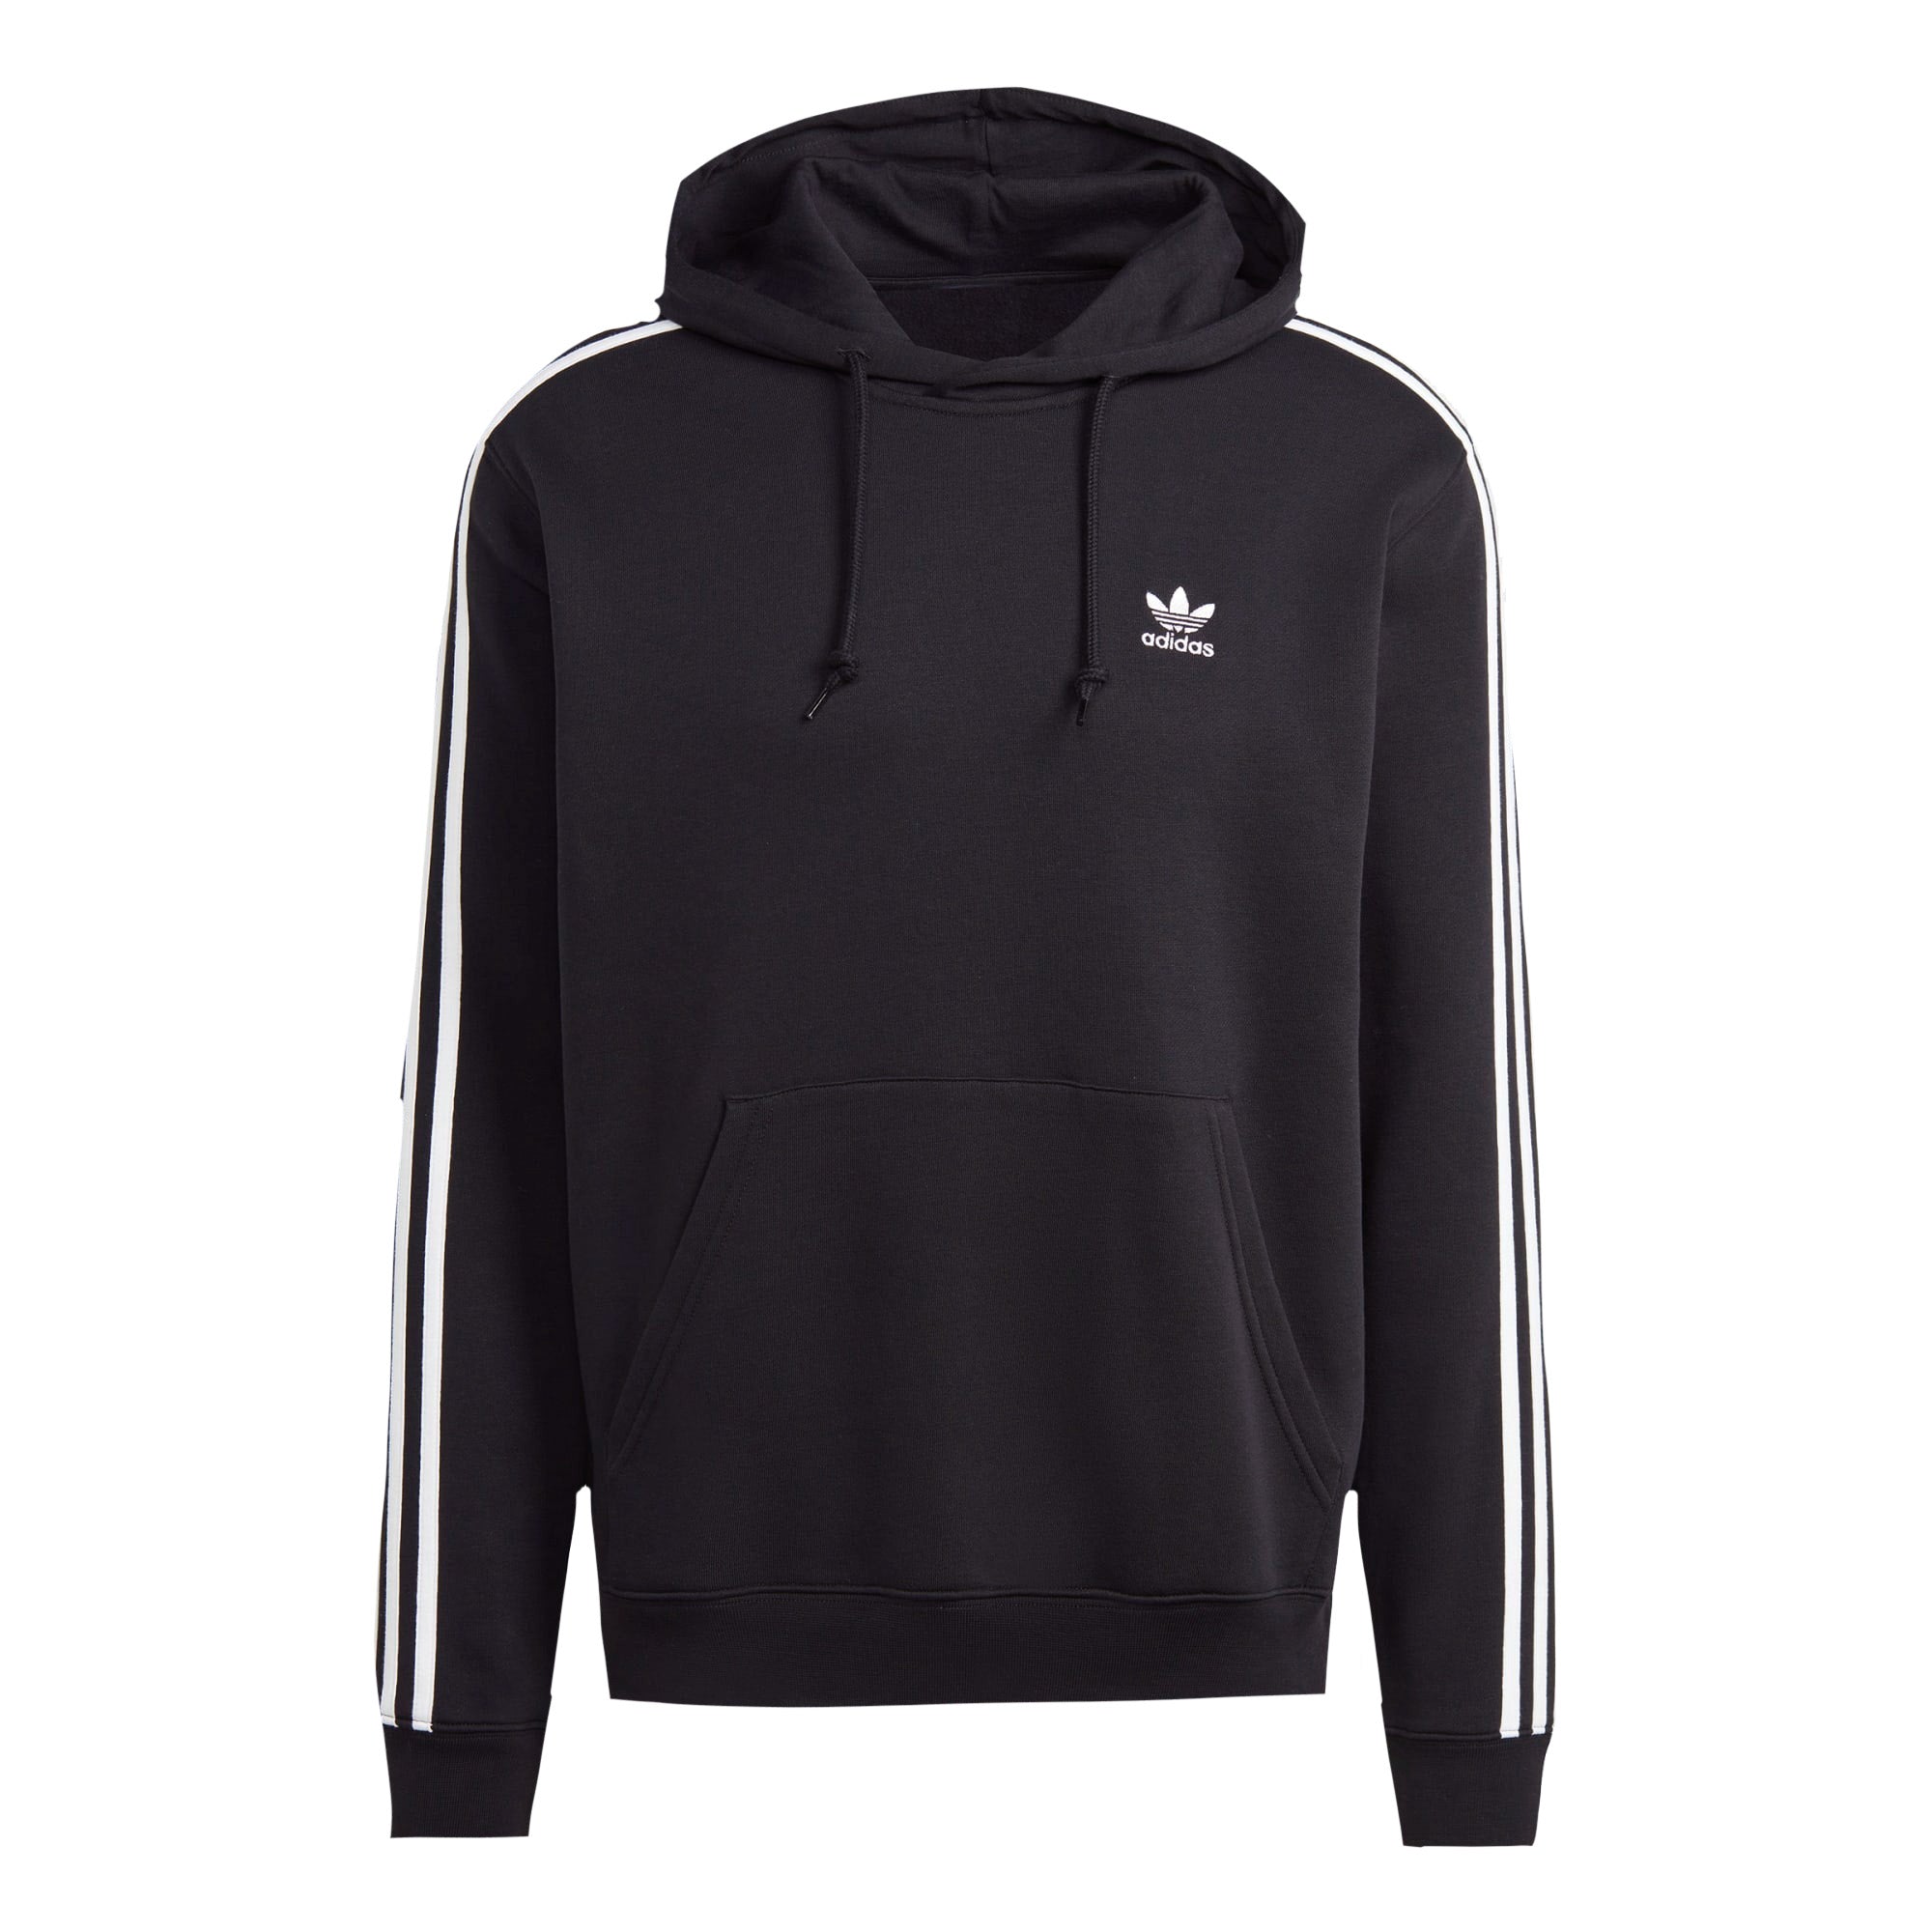 Adidas 3-Stripes Black Sweatshirt